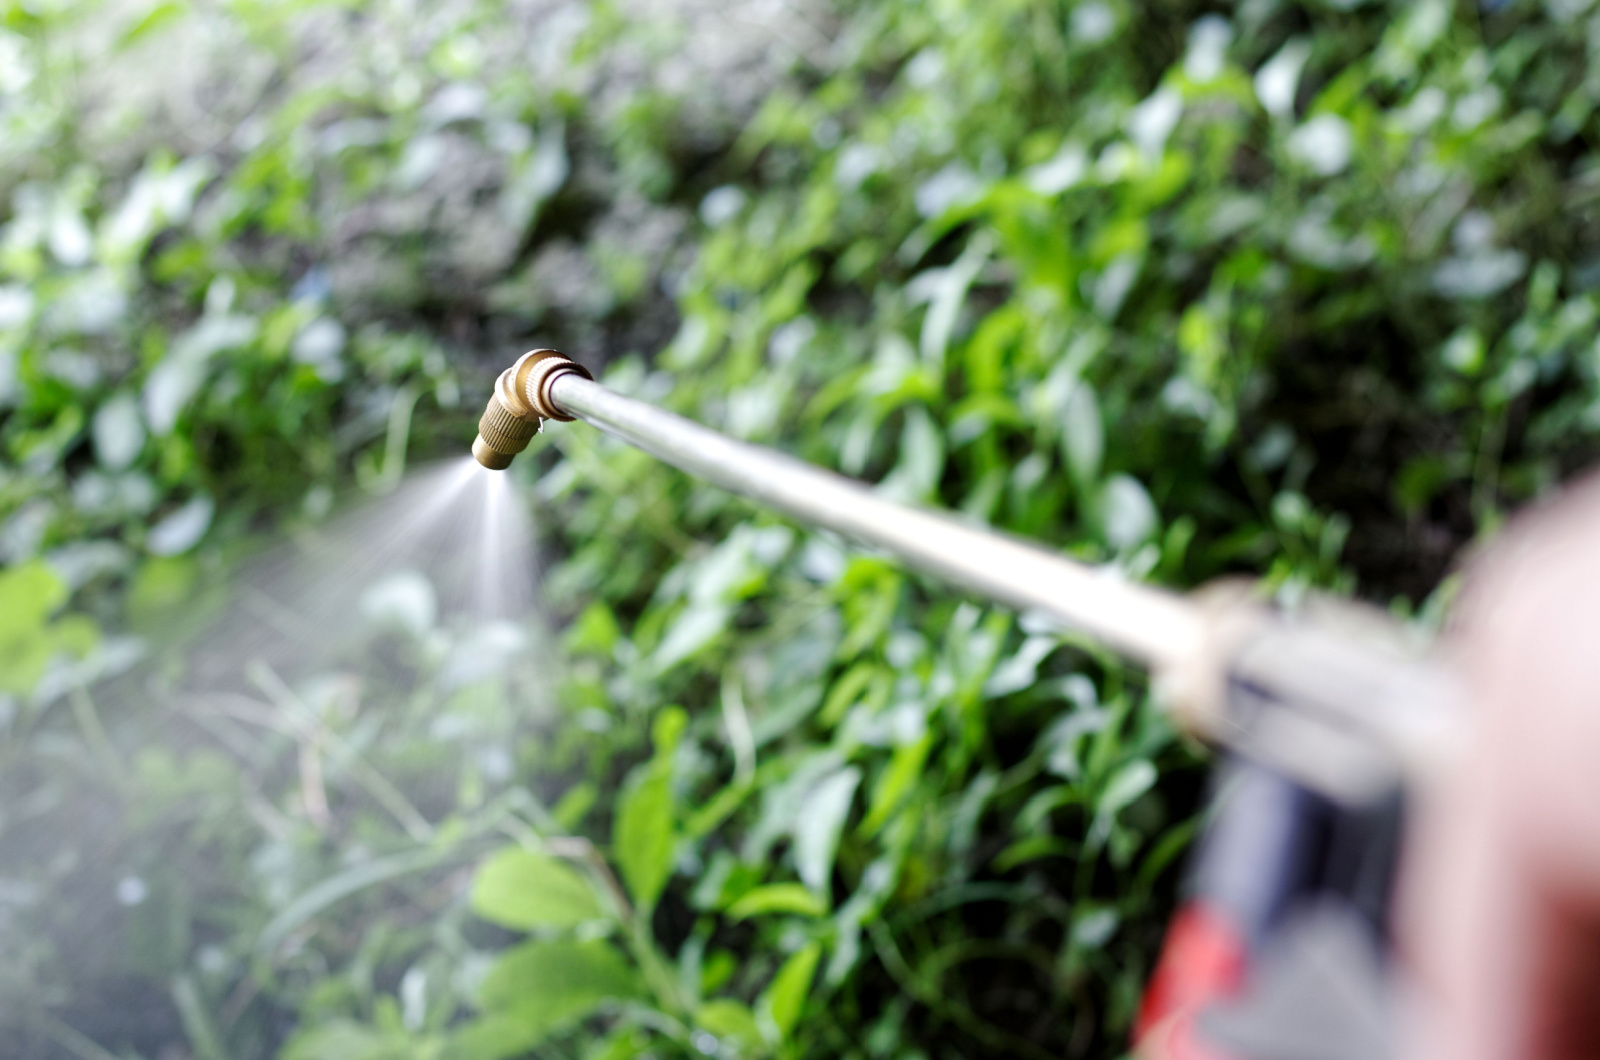 spraying herbicide